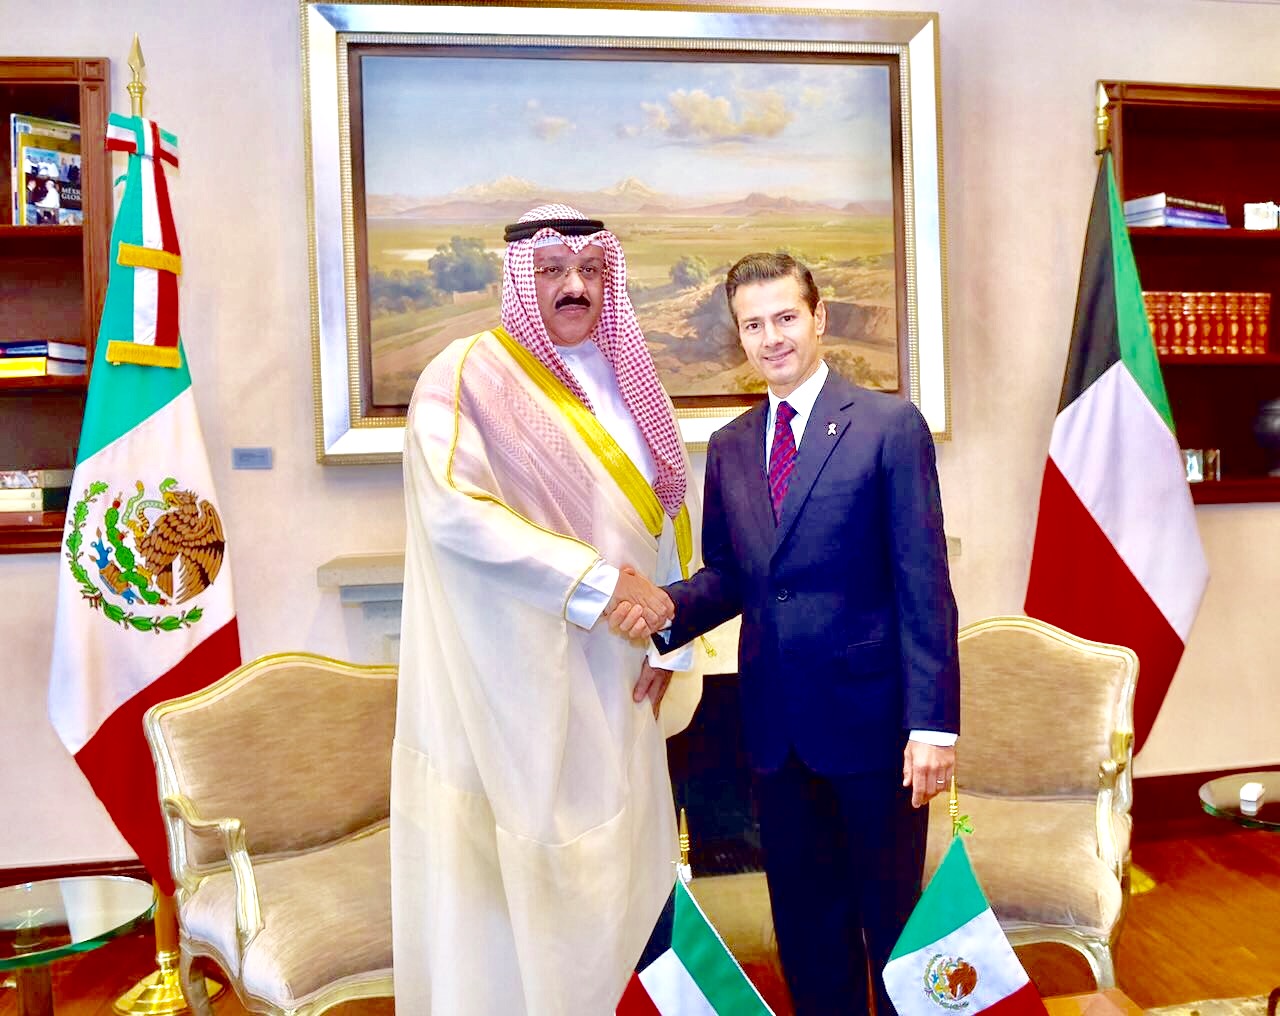 Kuwaiti Ambassador to Mexico Samih Hayat and Mexican President Enrique Pena Nieto